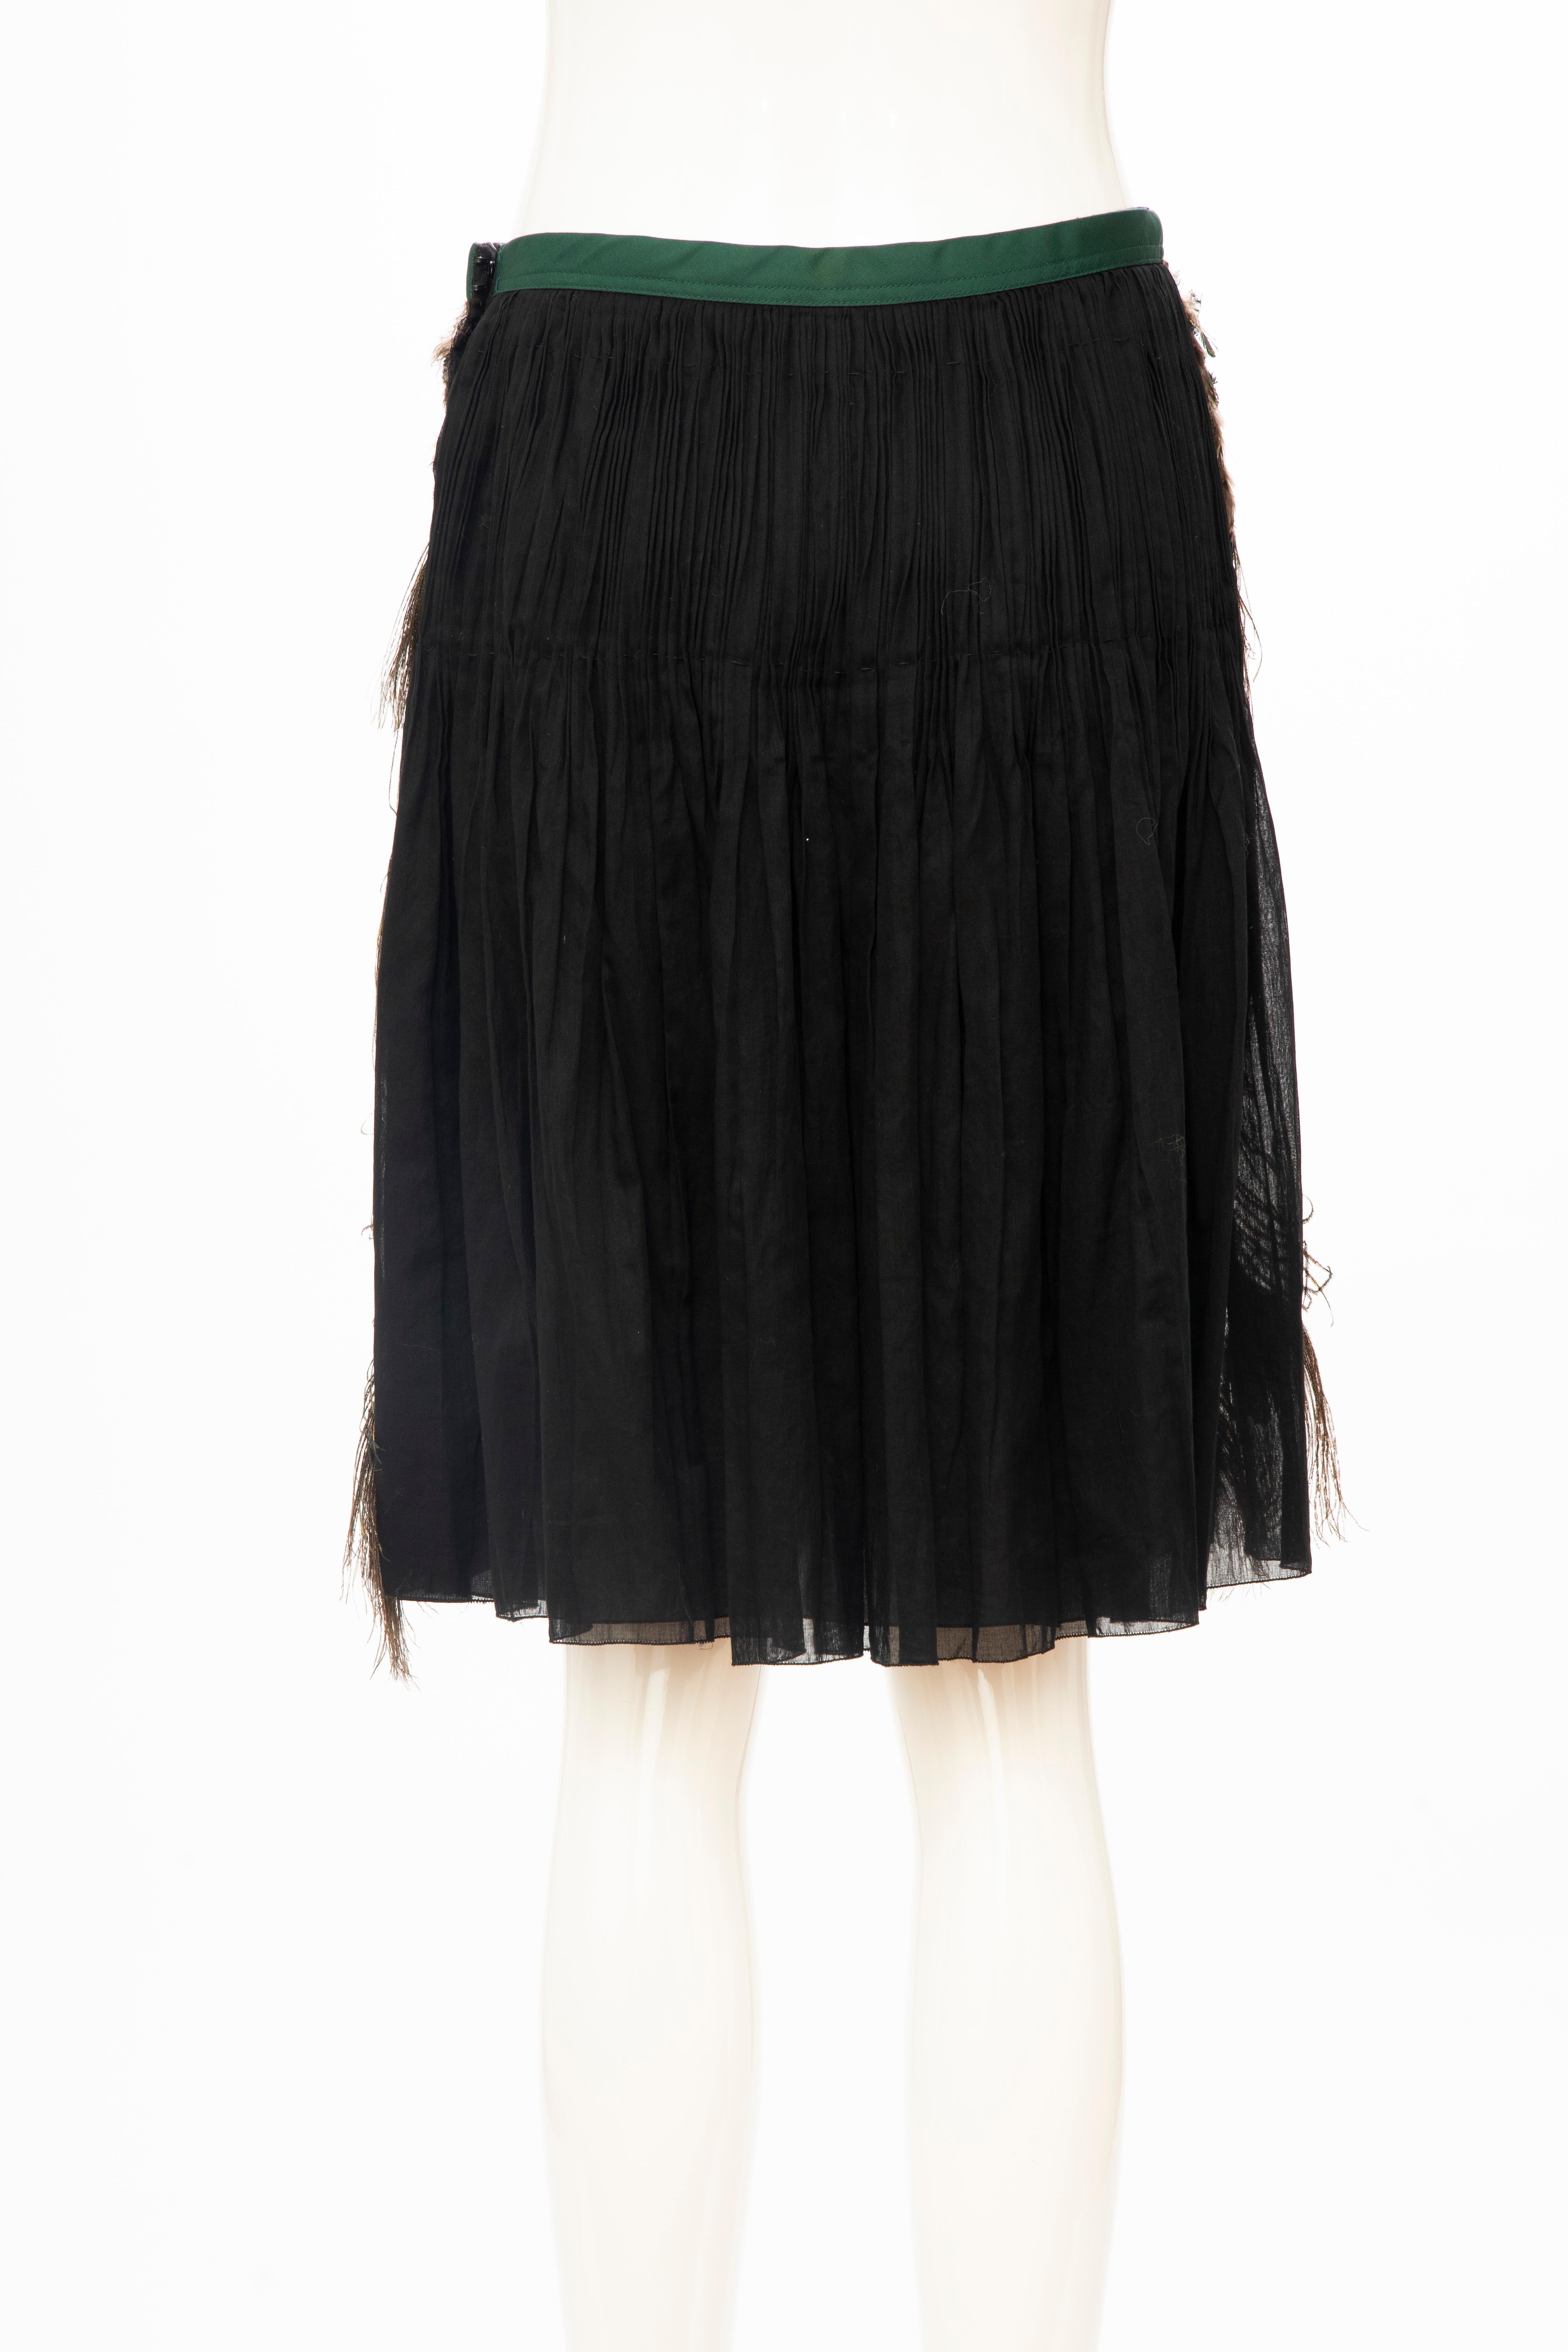 Women's Prada Runway Black Cotton Pleated Skirt Appliquéd Peacock Feathers, Spring 2005 For Sale